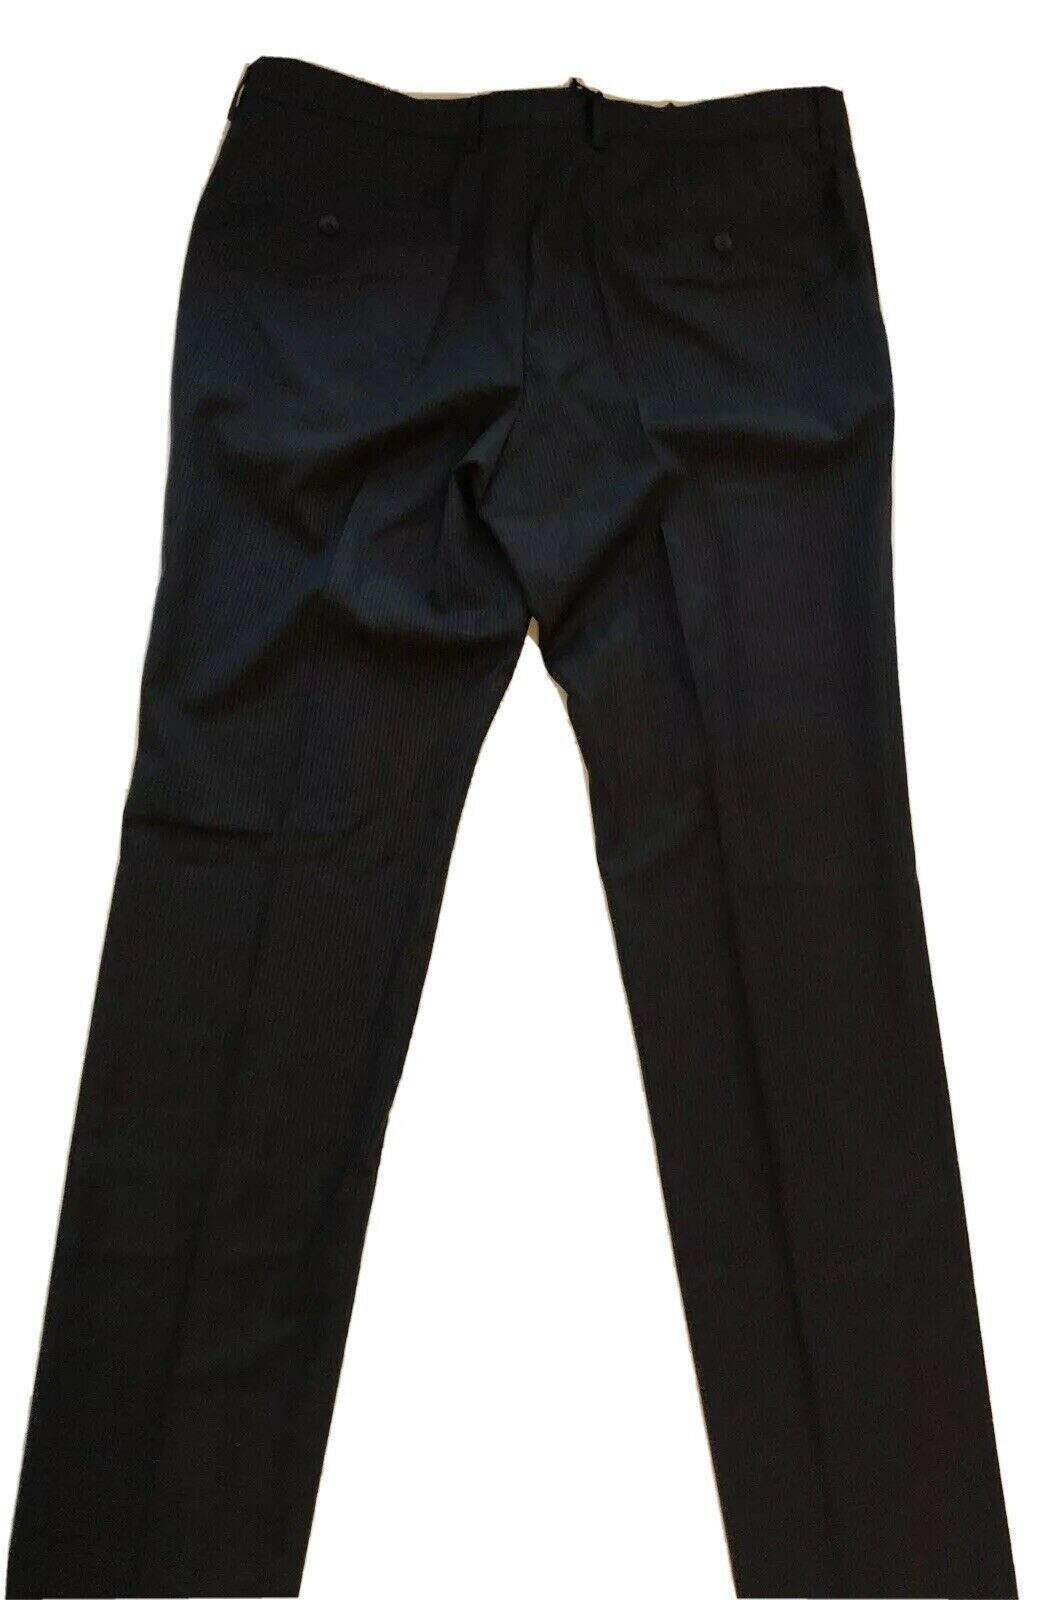 NWT $245 Boss Hugo Boss Genesis2 Mens Wool Gray Dress Pants Size 38R US Germany